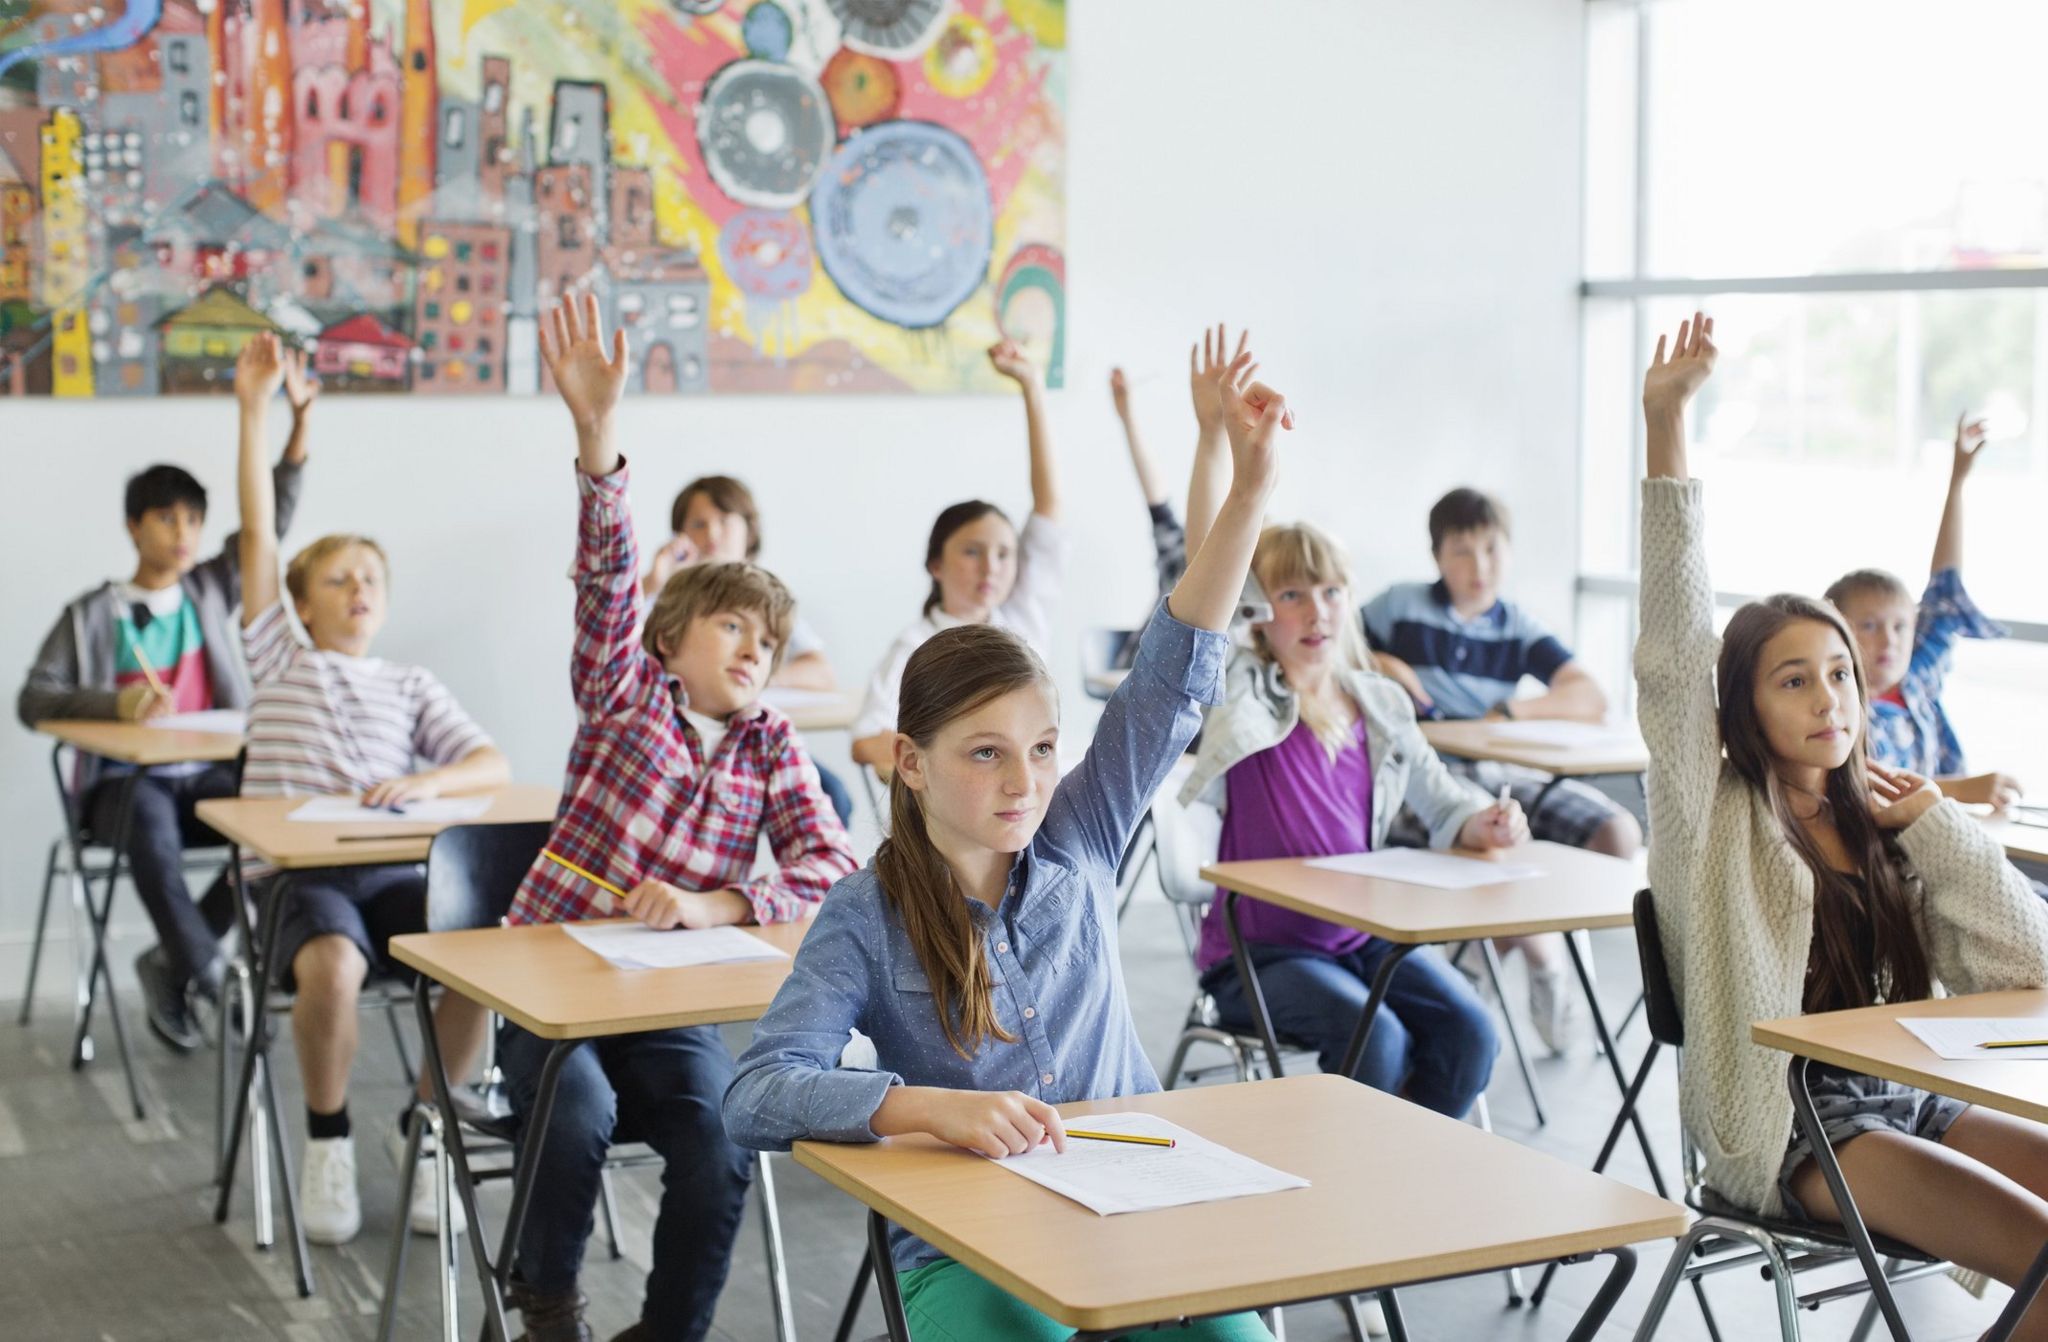 Children in a classroom put their hands up